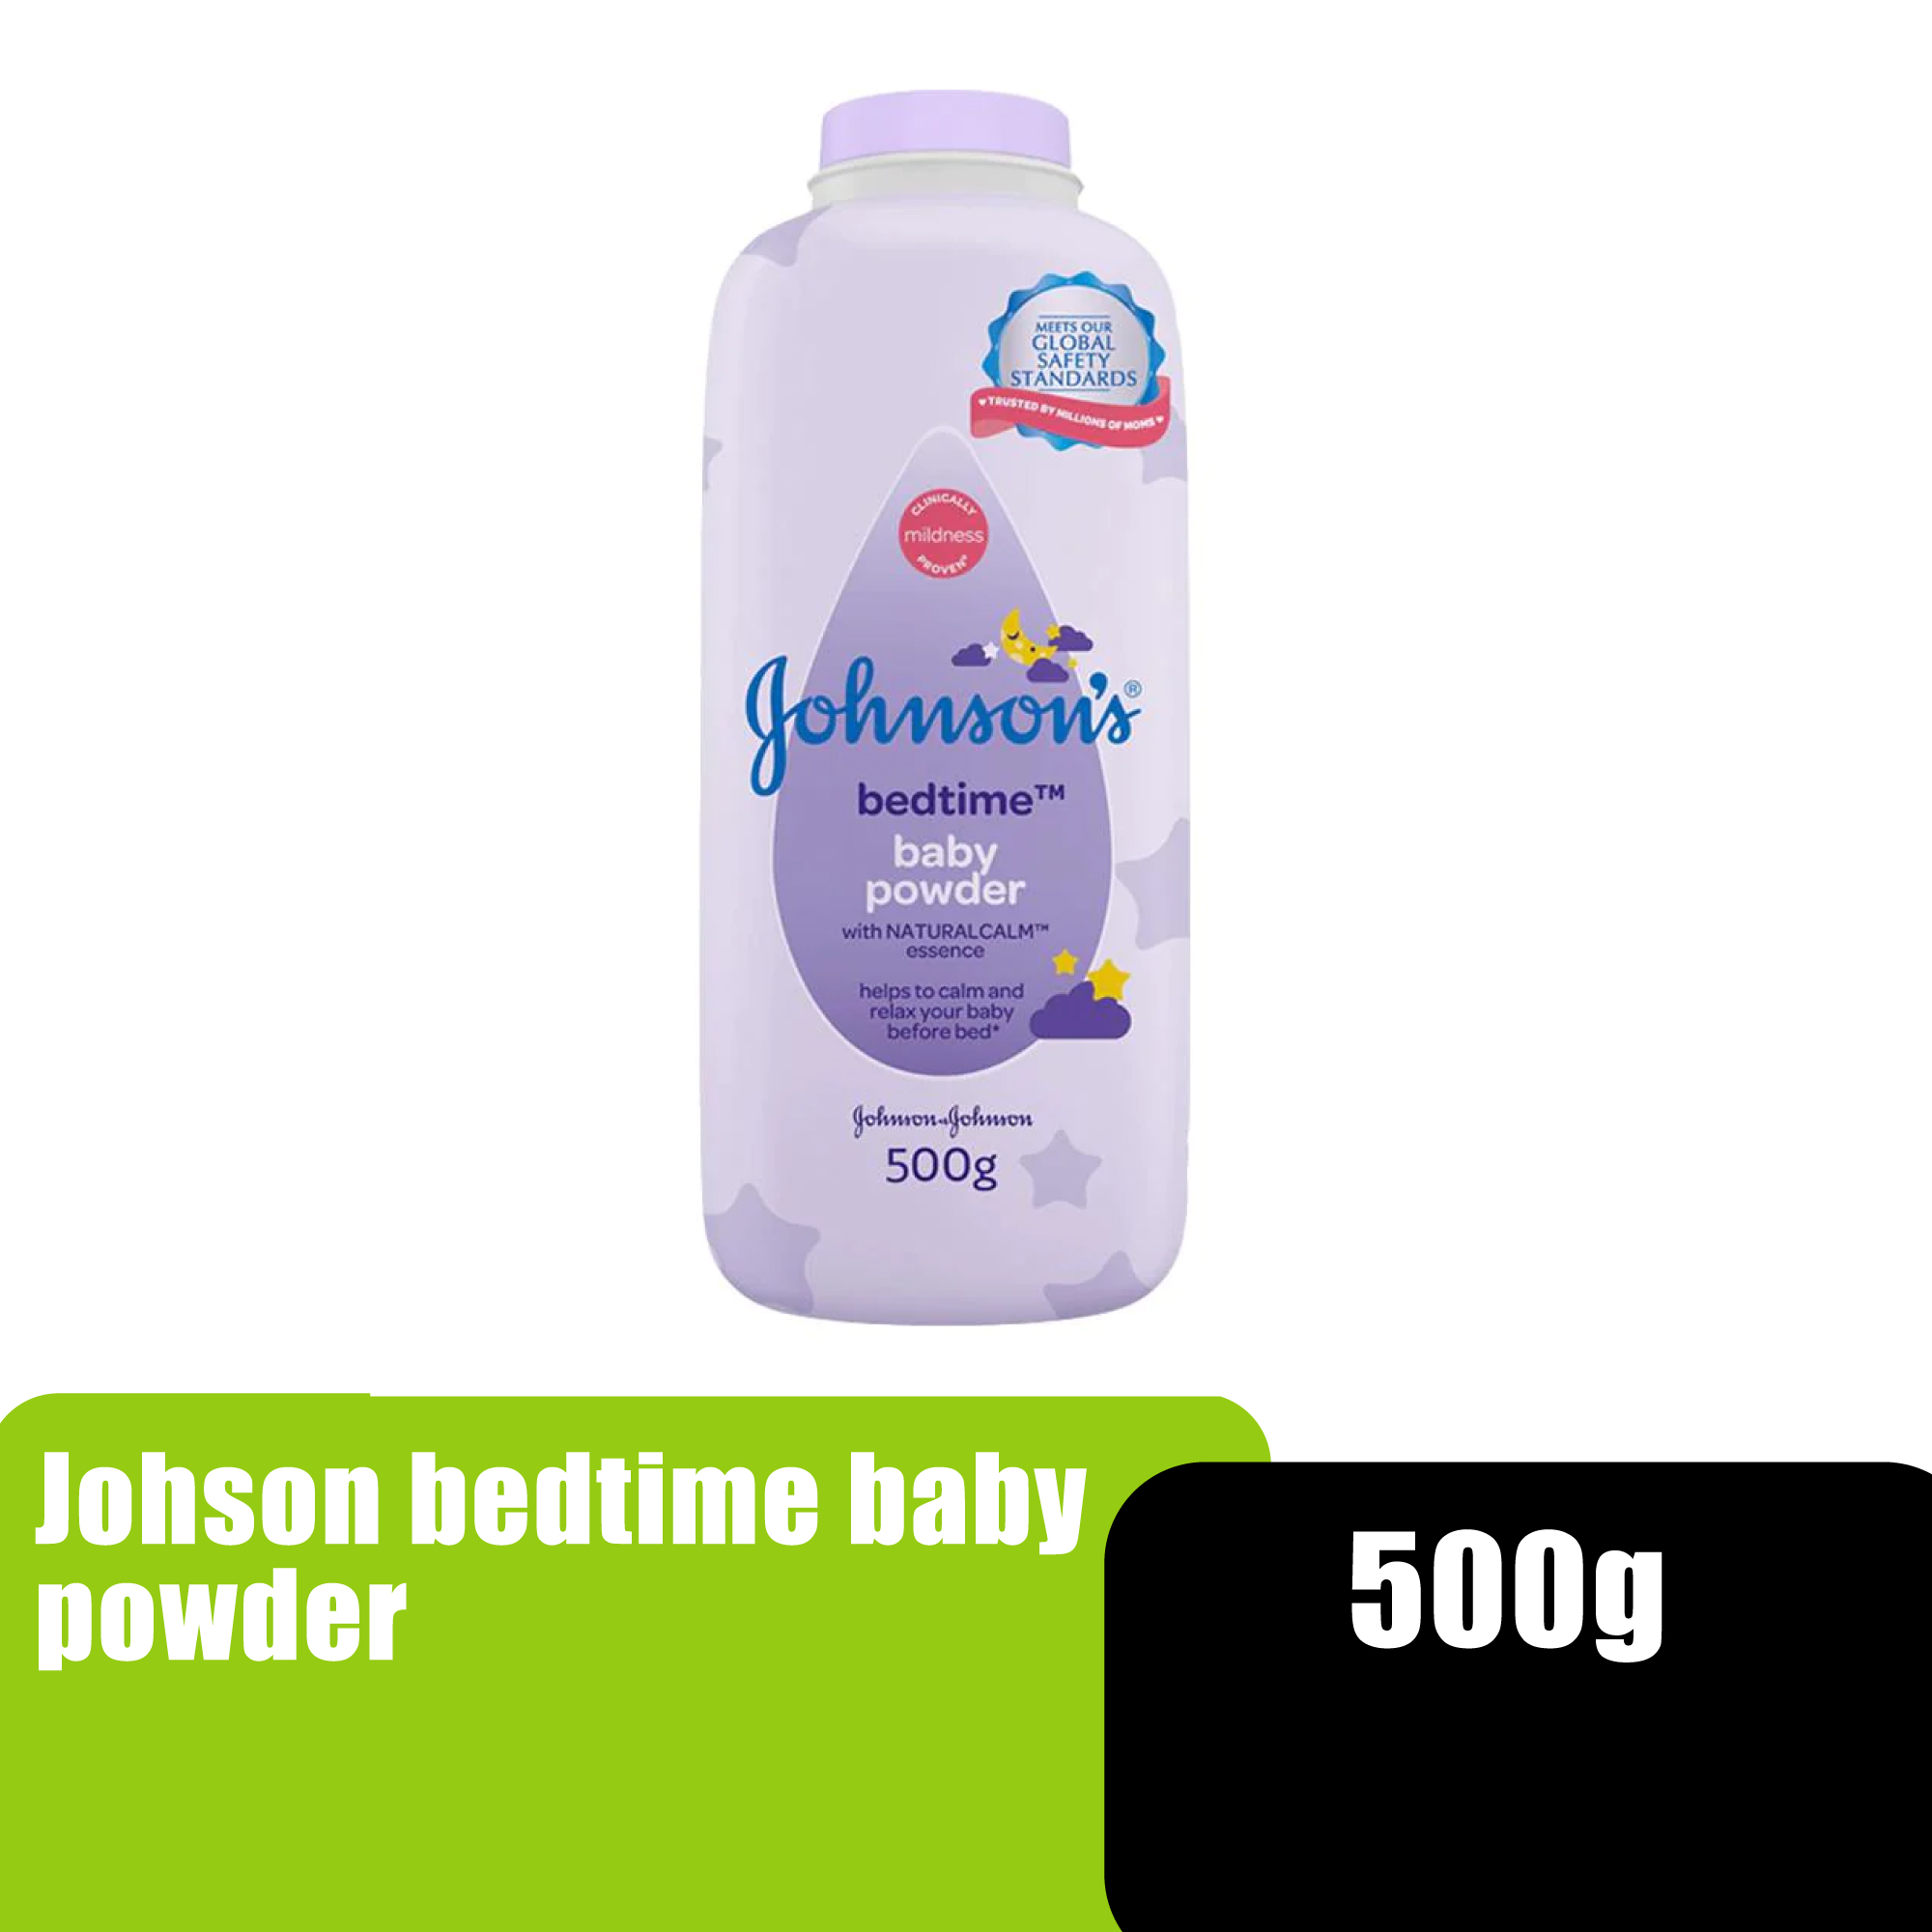 JOHNSON & JOHNSON BABY POWDER 500G - BEDTIME